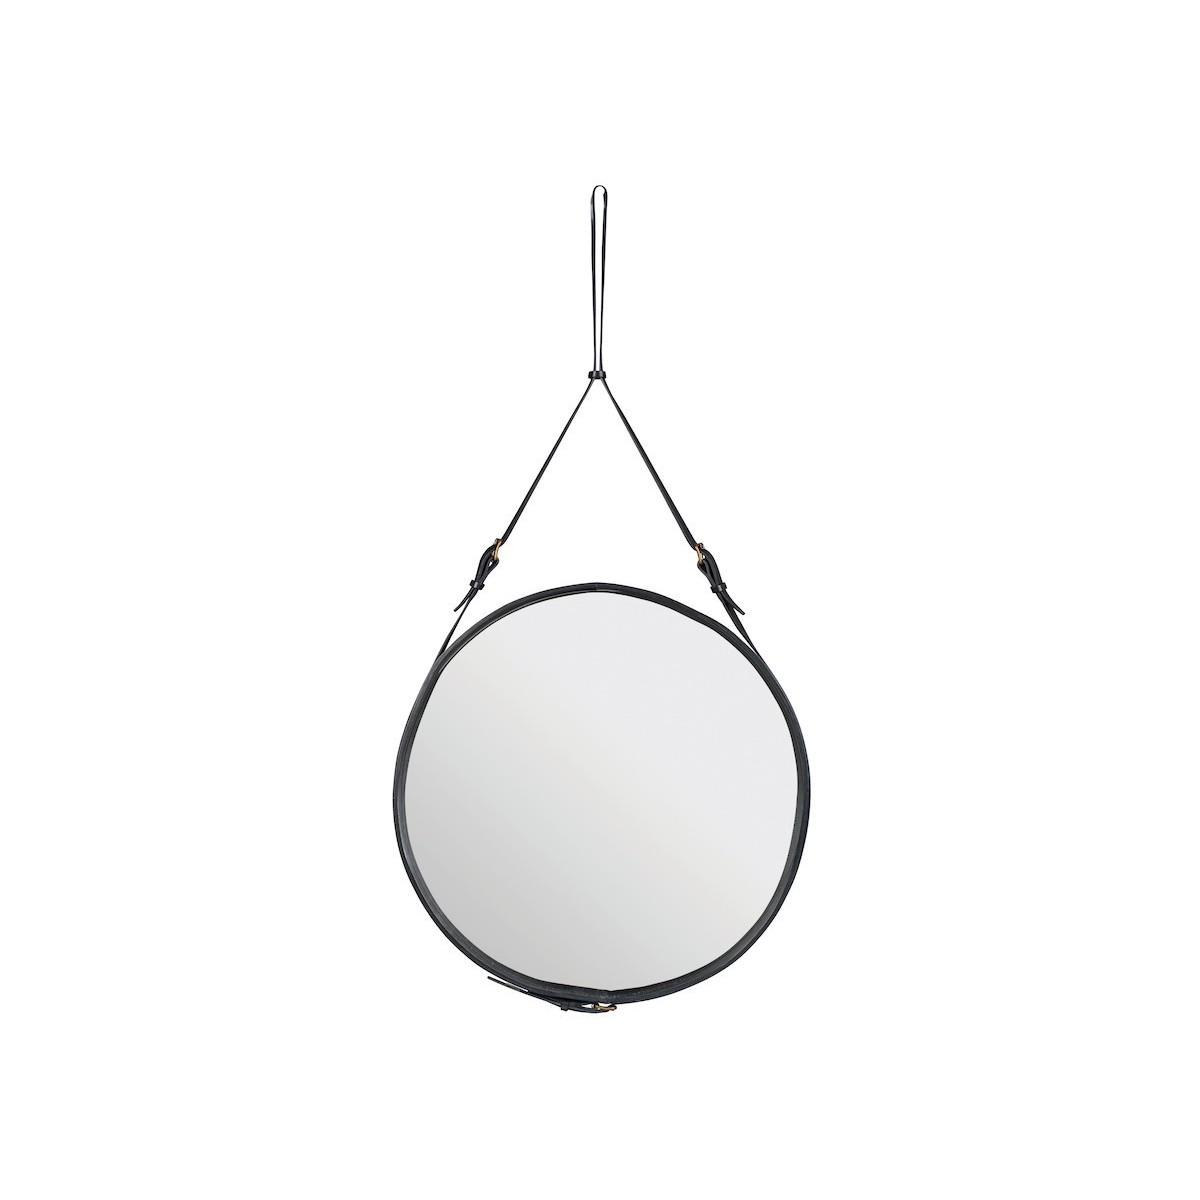 ø45cm - Cuir Noir - miroir circulaire Adnet